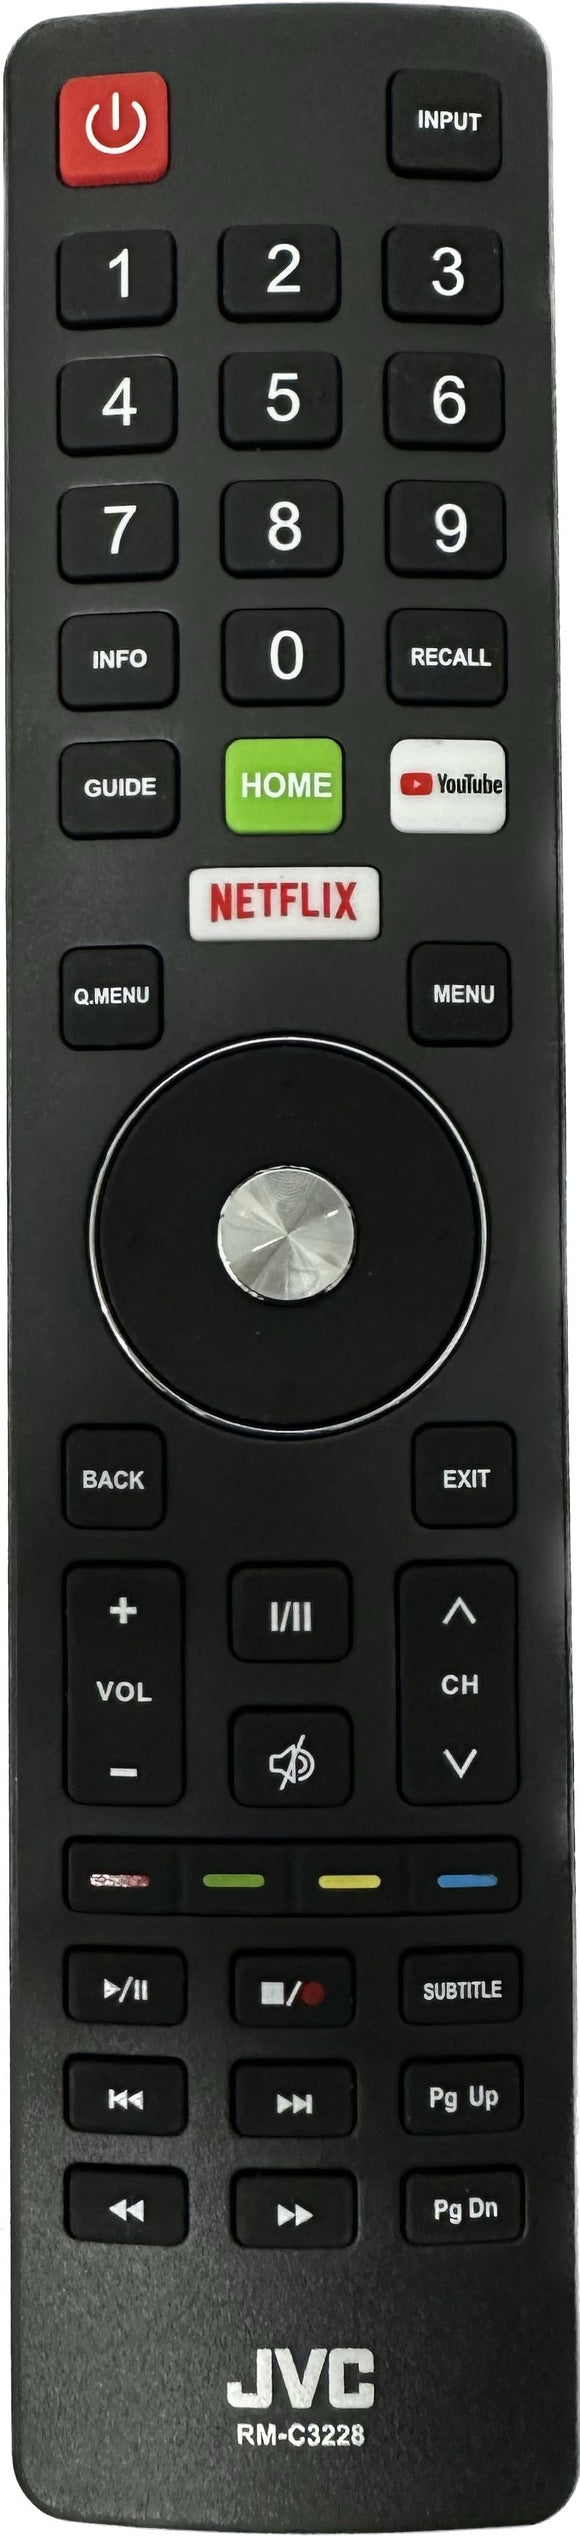 JVC Smart TV Original Remote Control  RM-C3228 - LT65N7105A LT55N7105A TV Genuine